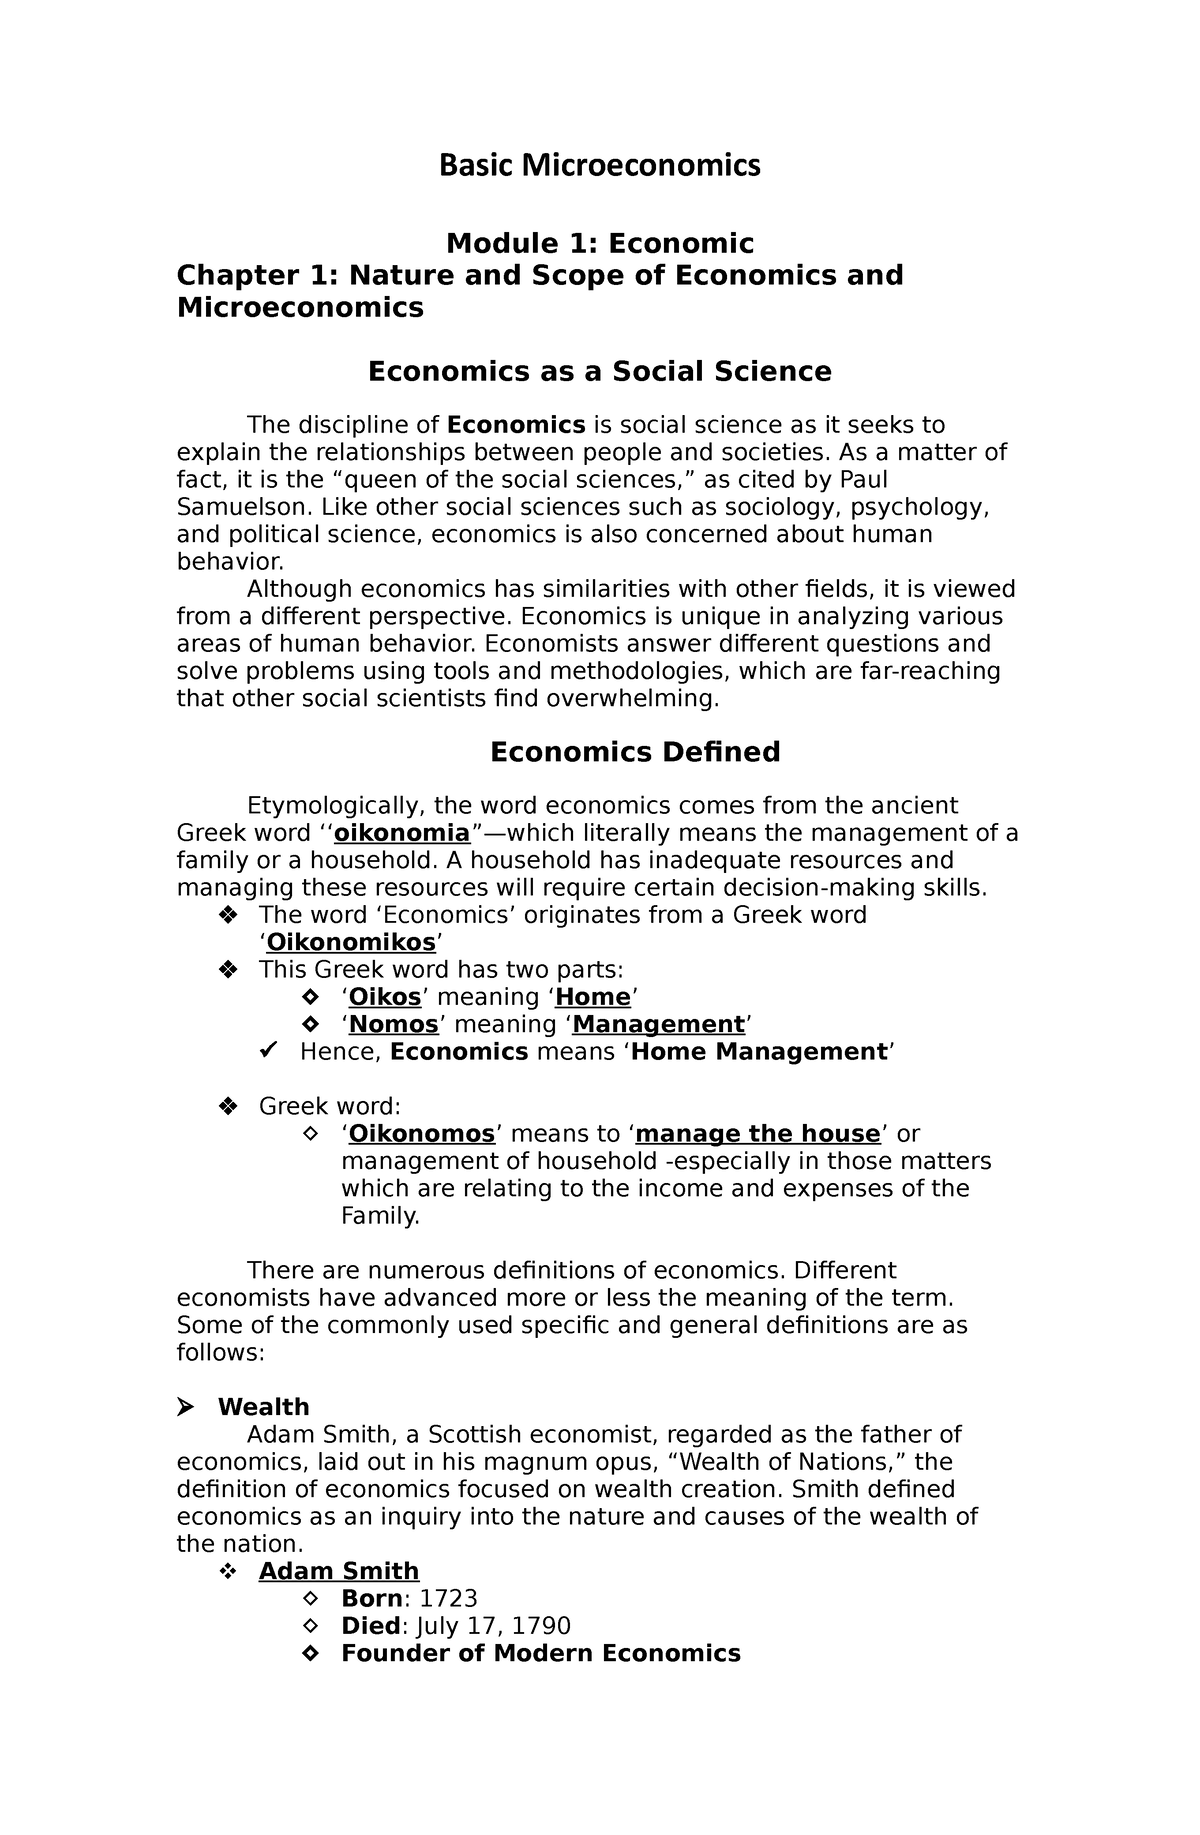 microeconomics assignment sample